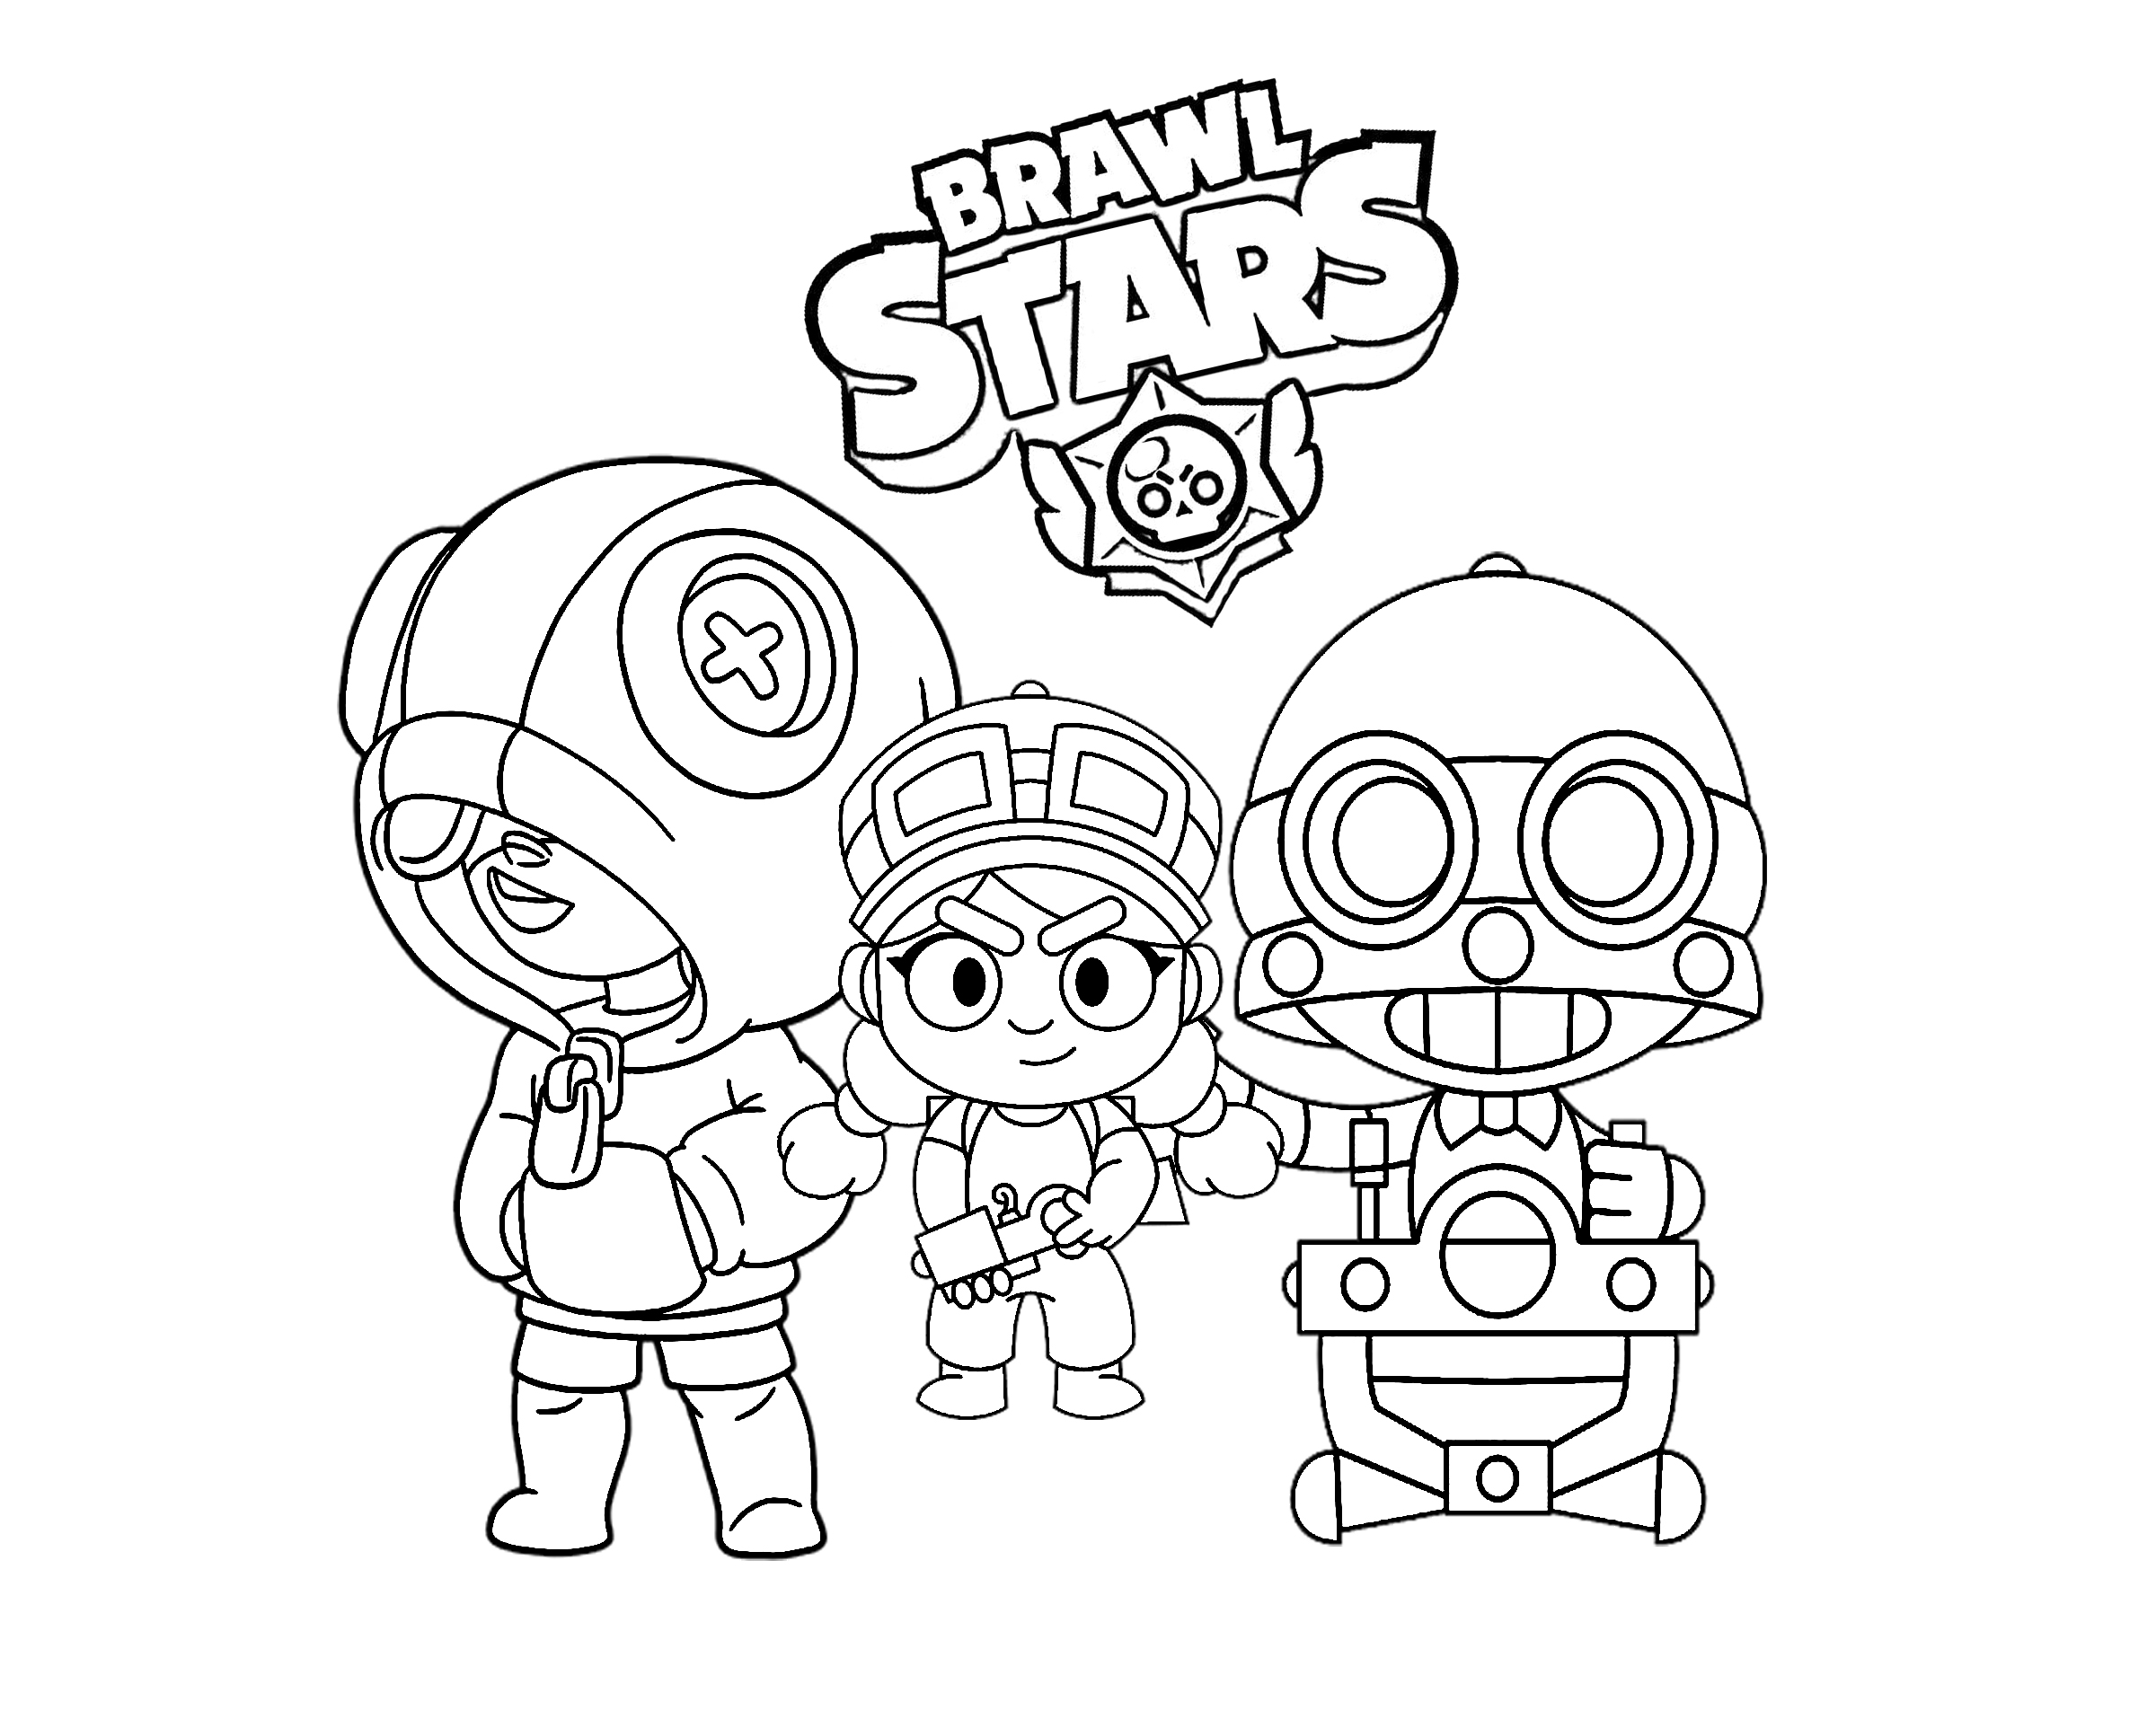 18 Dibujos De Brawl Stars Para Colorear - dibujos de personajes de brawl stars para colorear